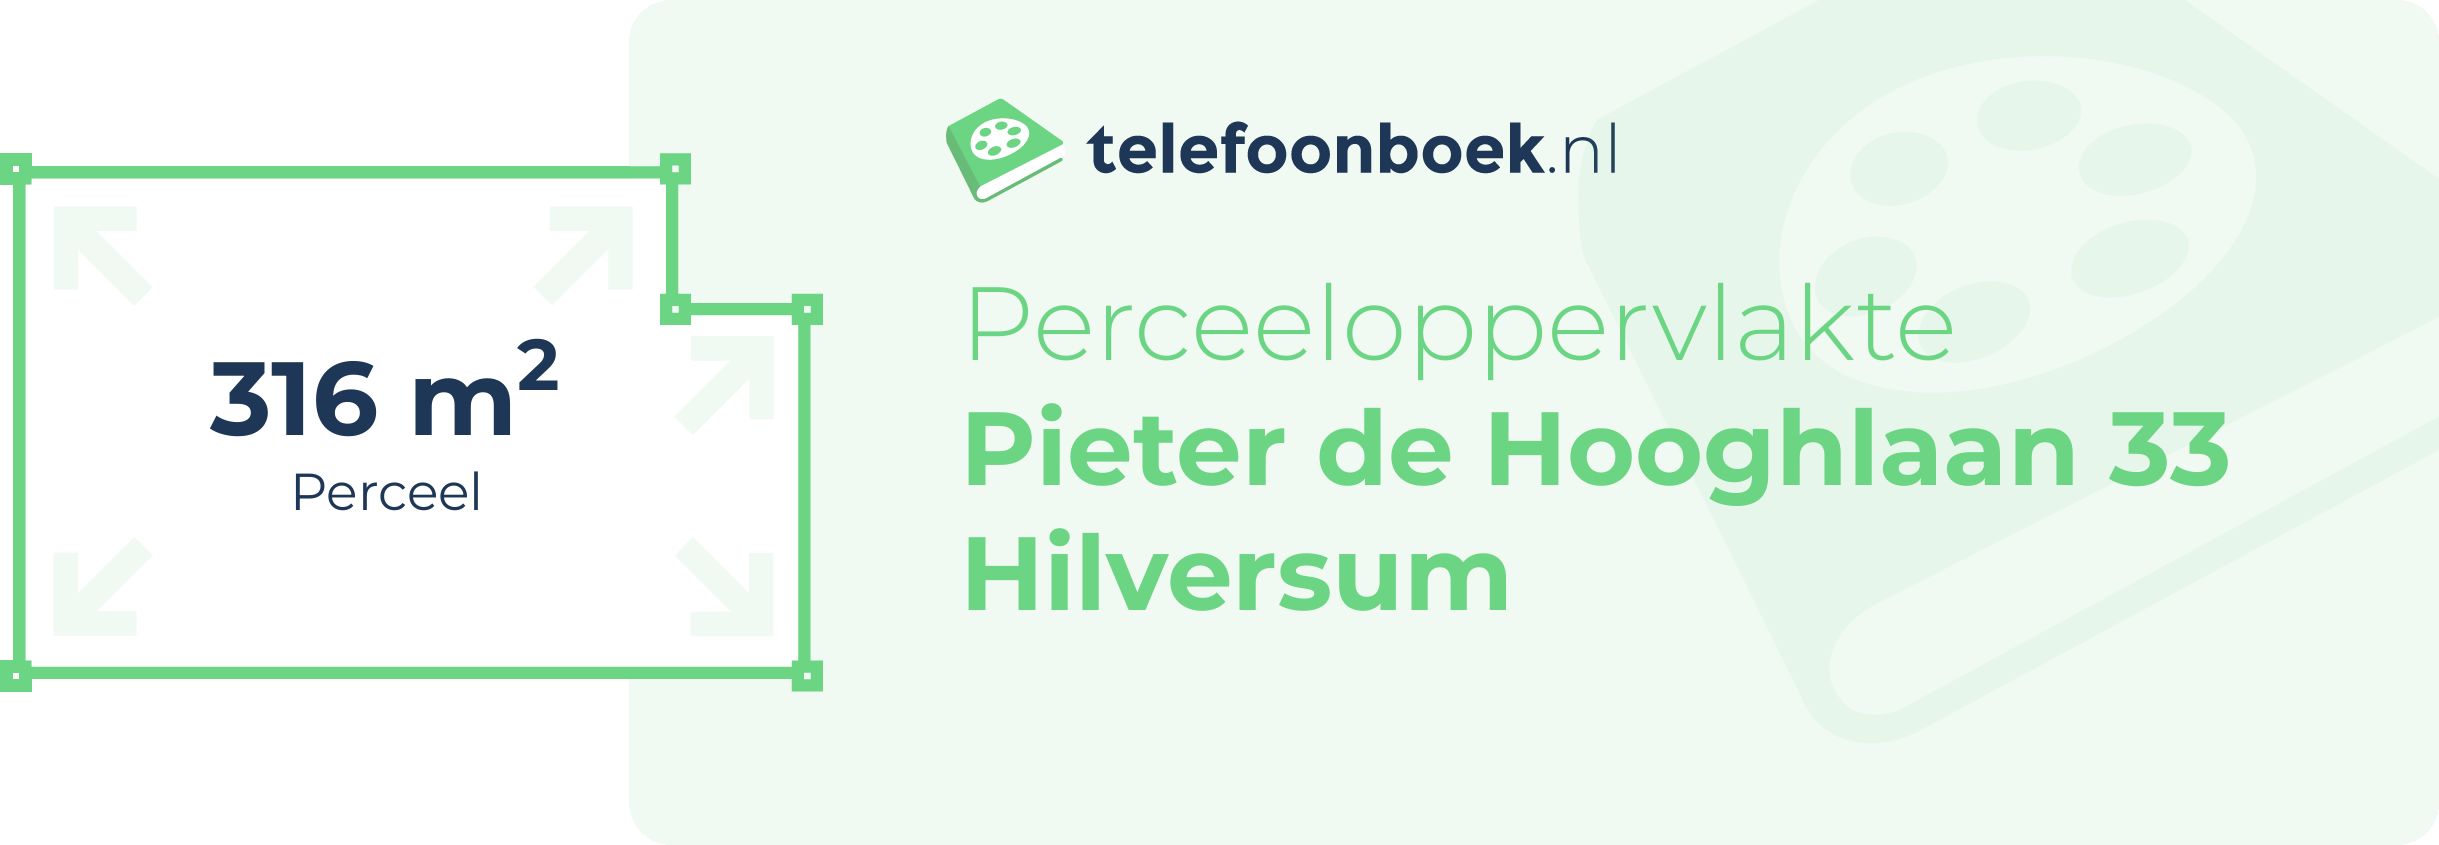 Perceeloppervlakte Pieter De Hooghlaan 33 Hilversum